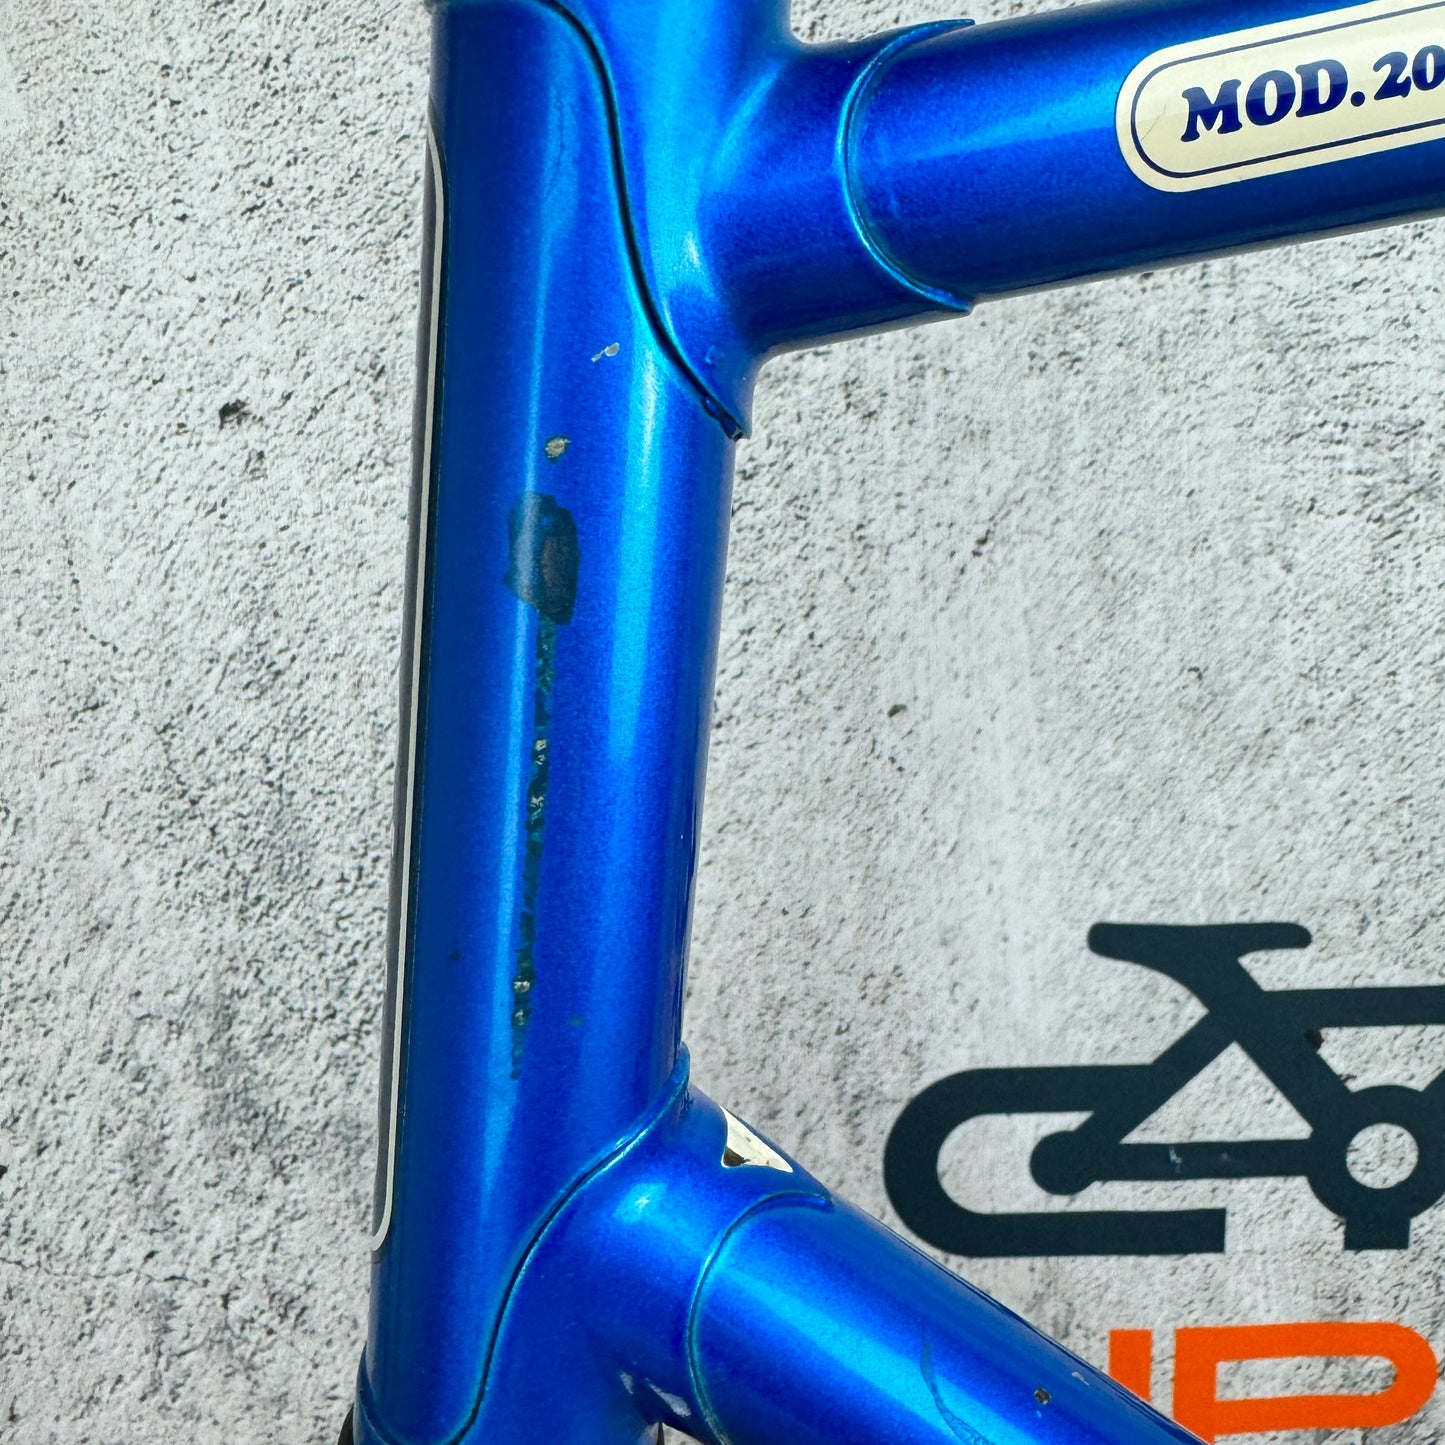 Benotto MOD 2000 57cm Rim Brake Steel Road Bike Frameset 700c 2736g